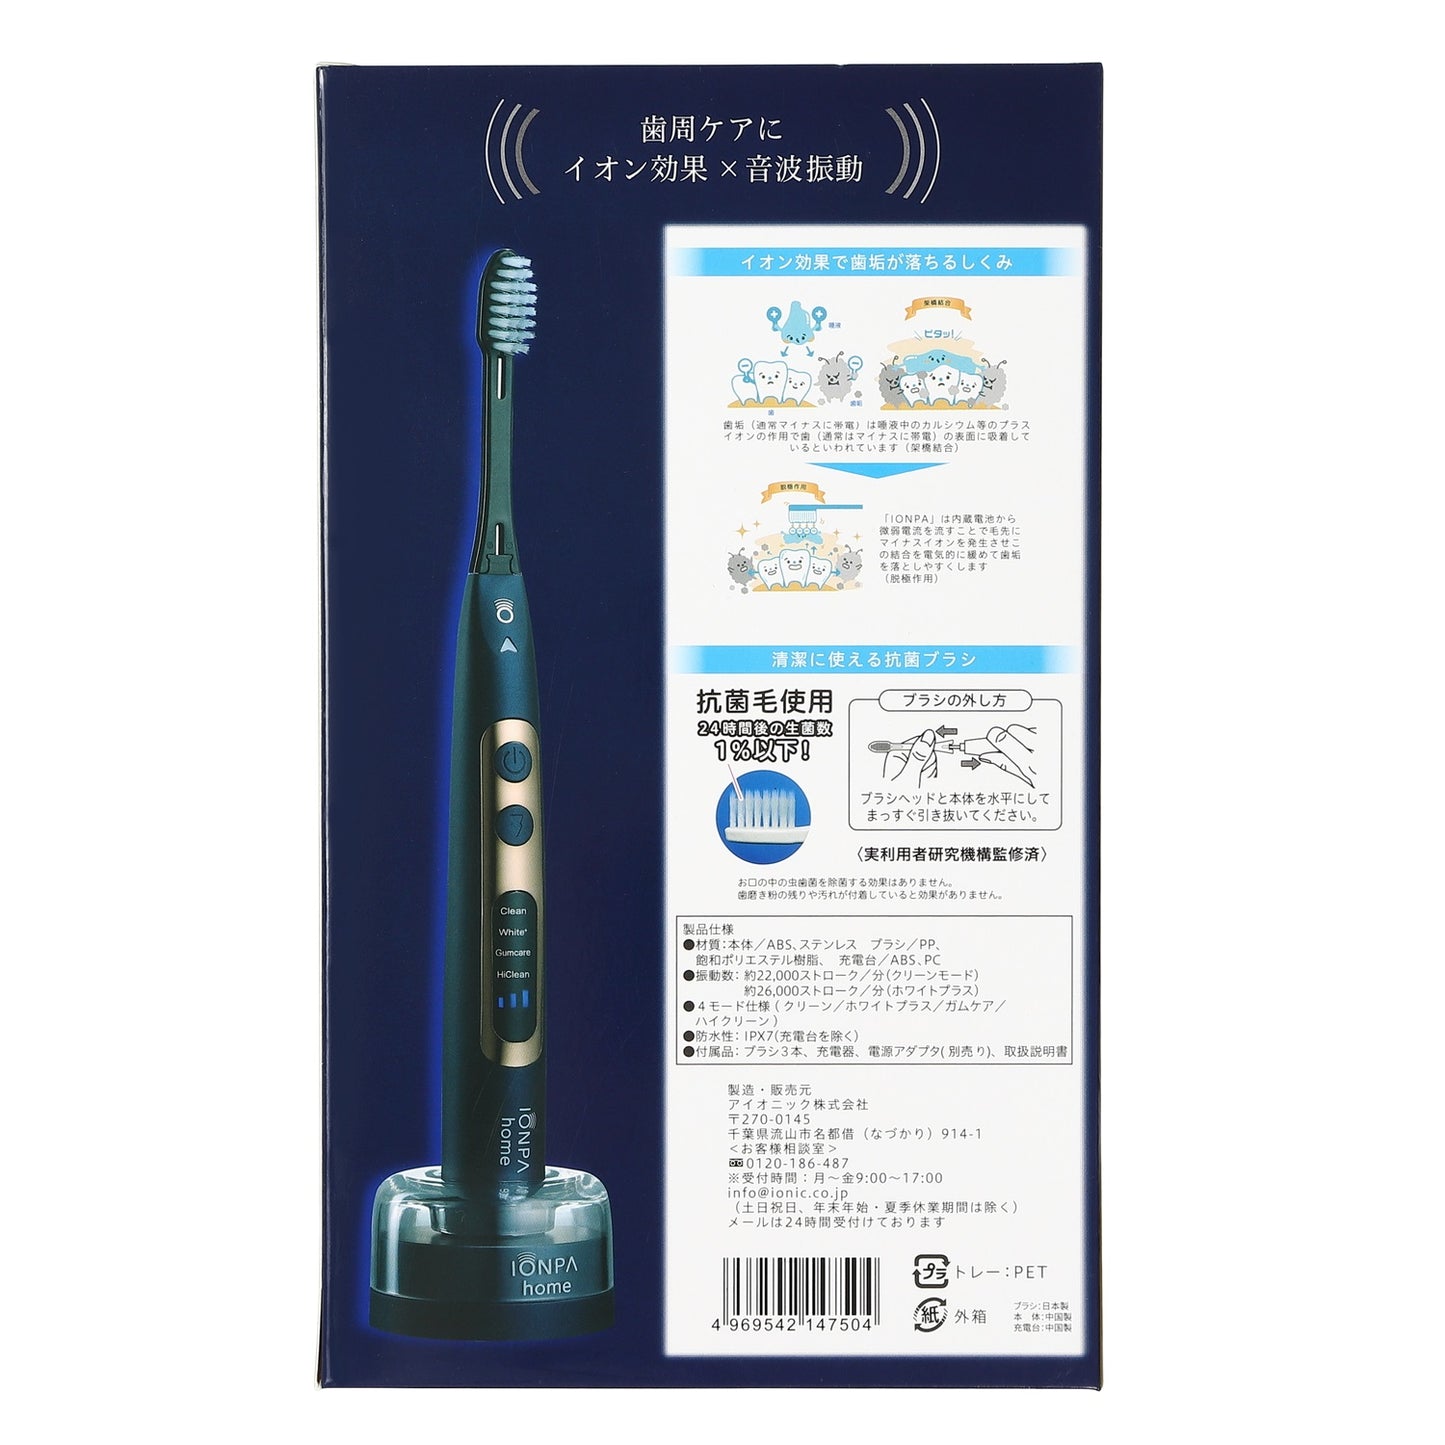 【NEW】 IONPA home DP-121  充電式 音波振動歯ブラシ イオンパホーム 本体